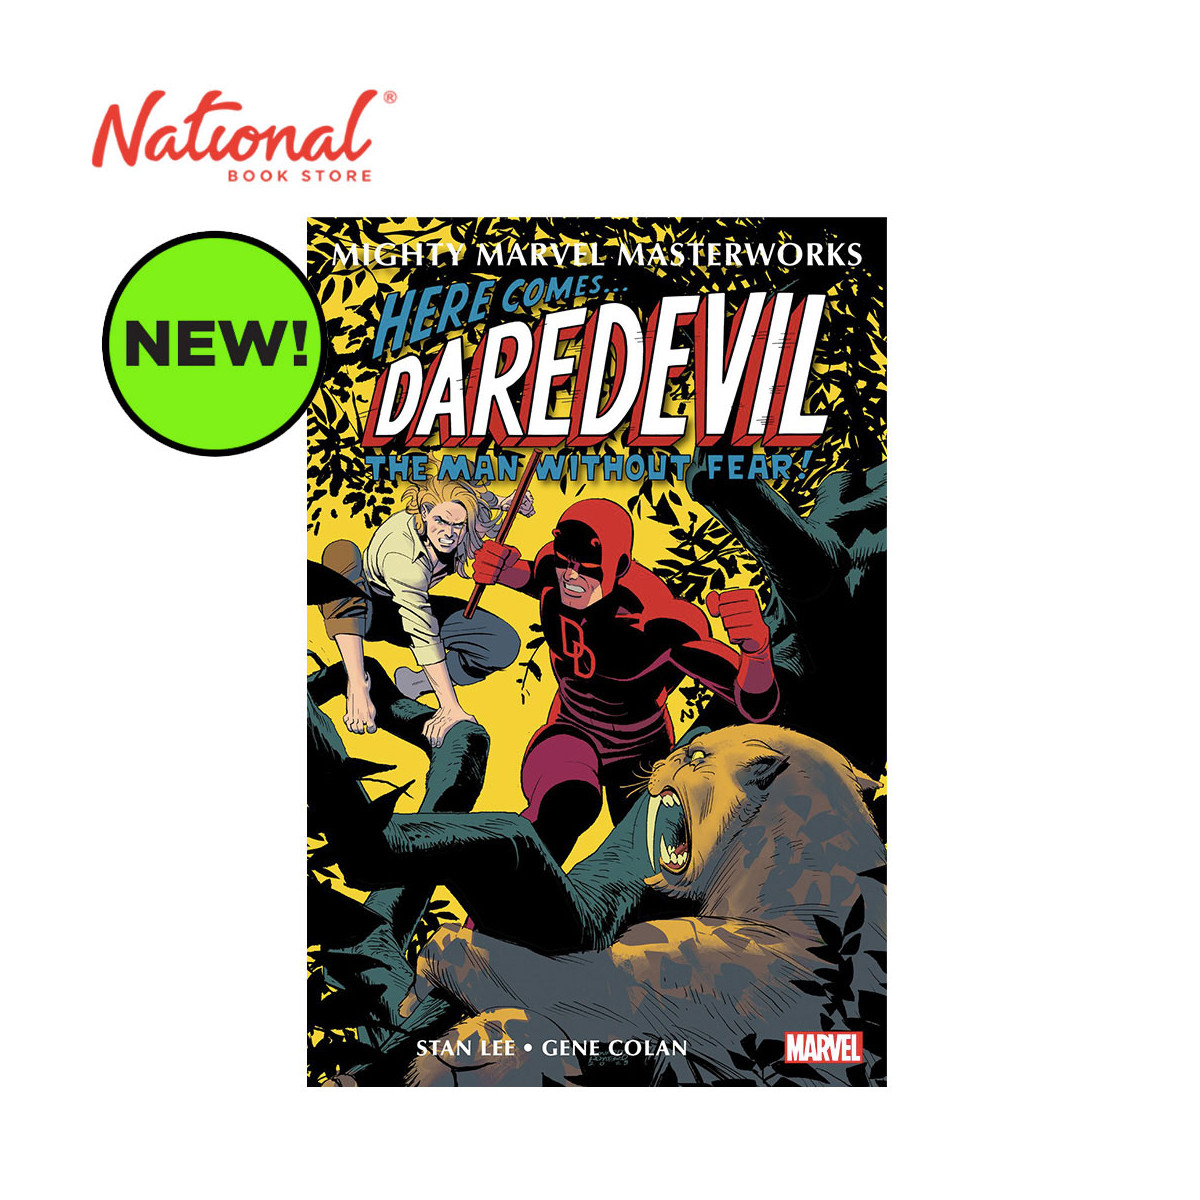 *PRE-ORDER* Mighty Marvel Masterworks: Daredevil Volume 3 by Stan Lee - Trade Paperback